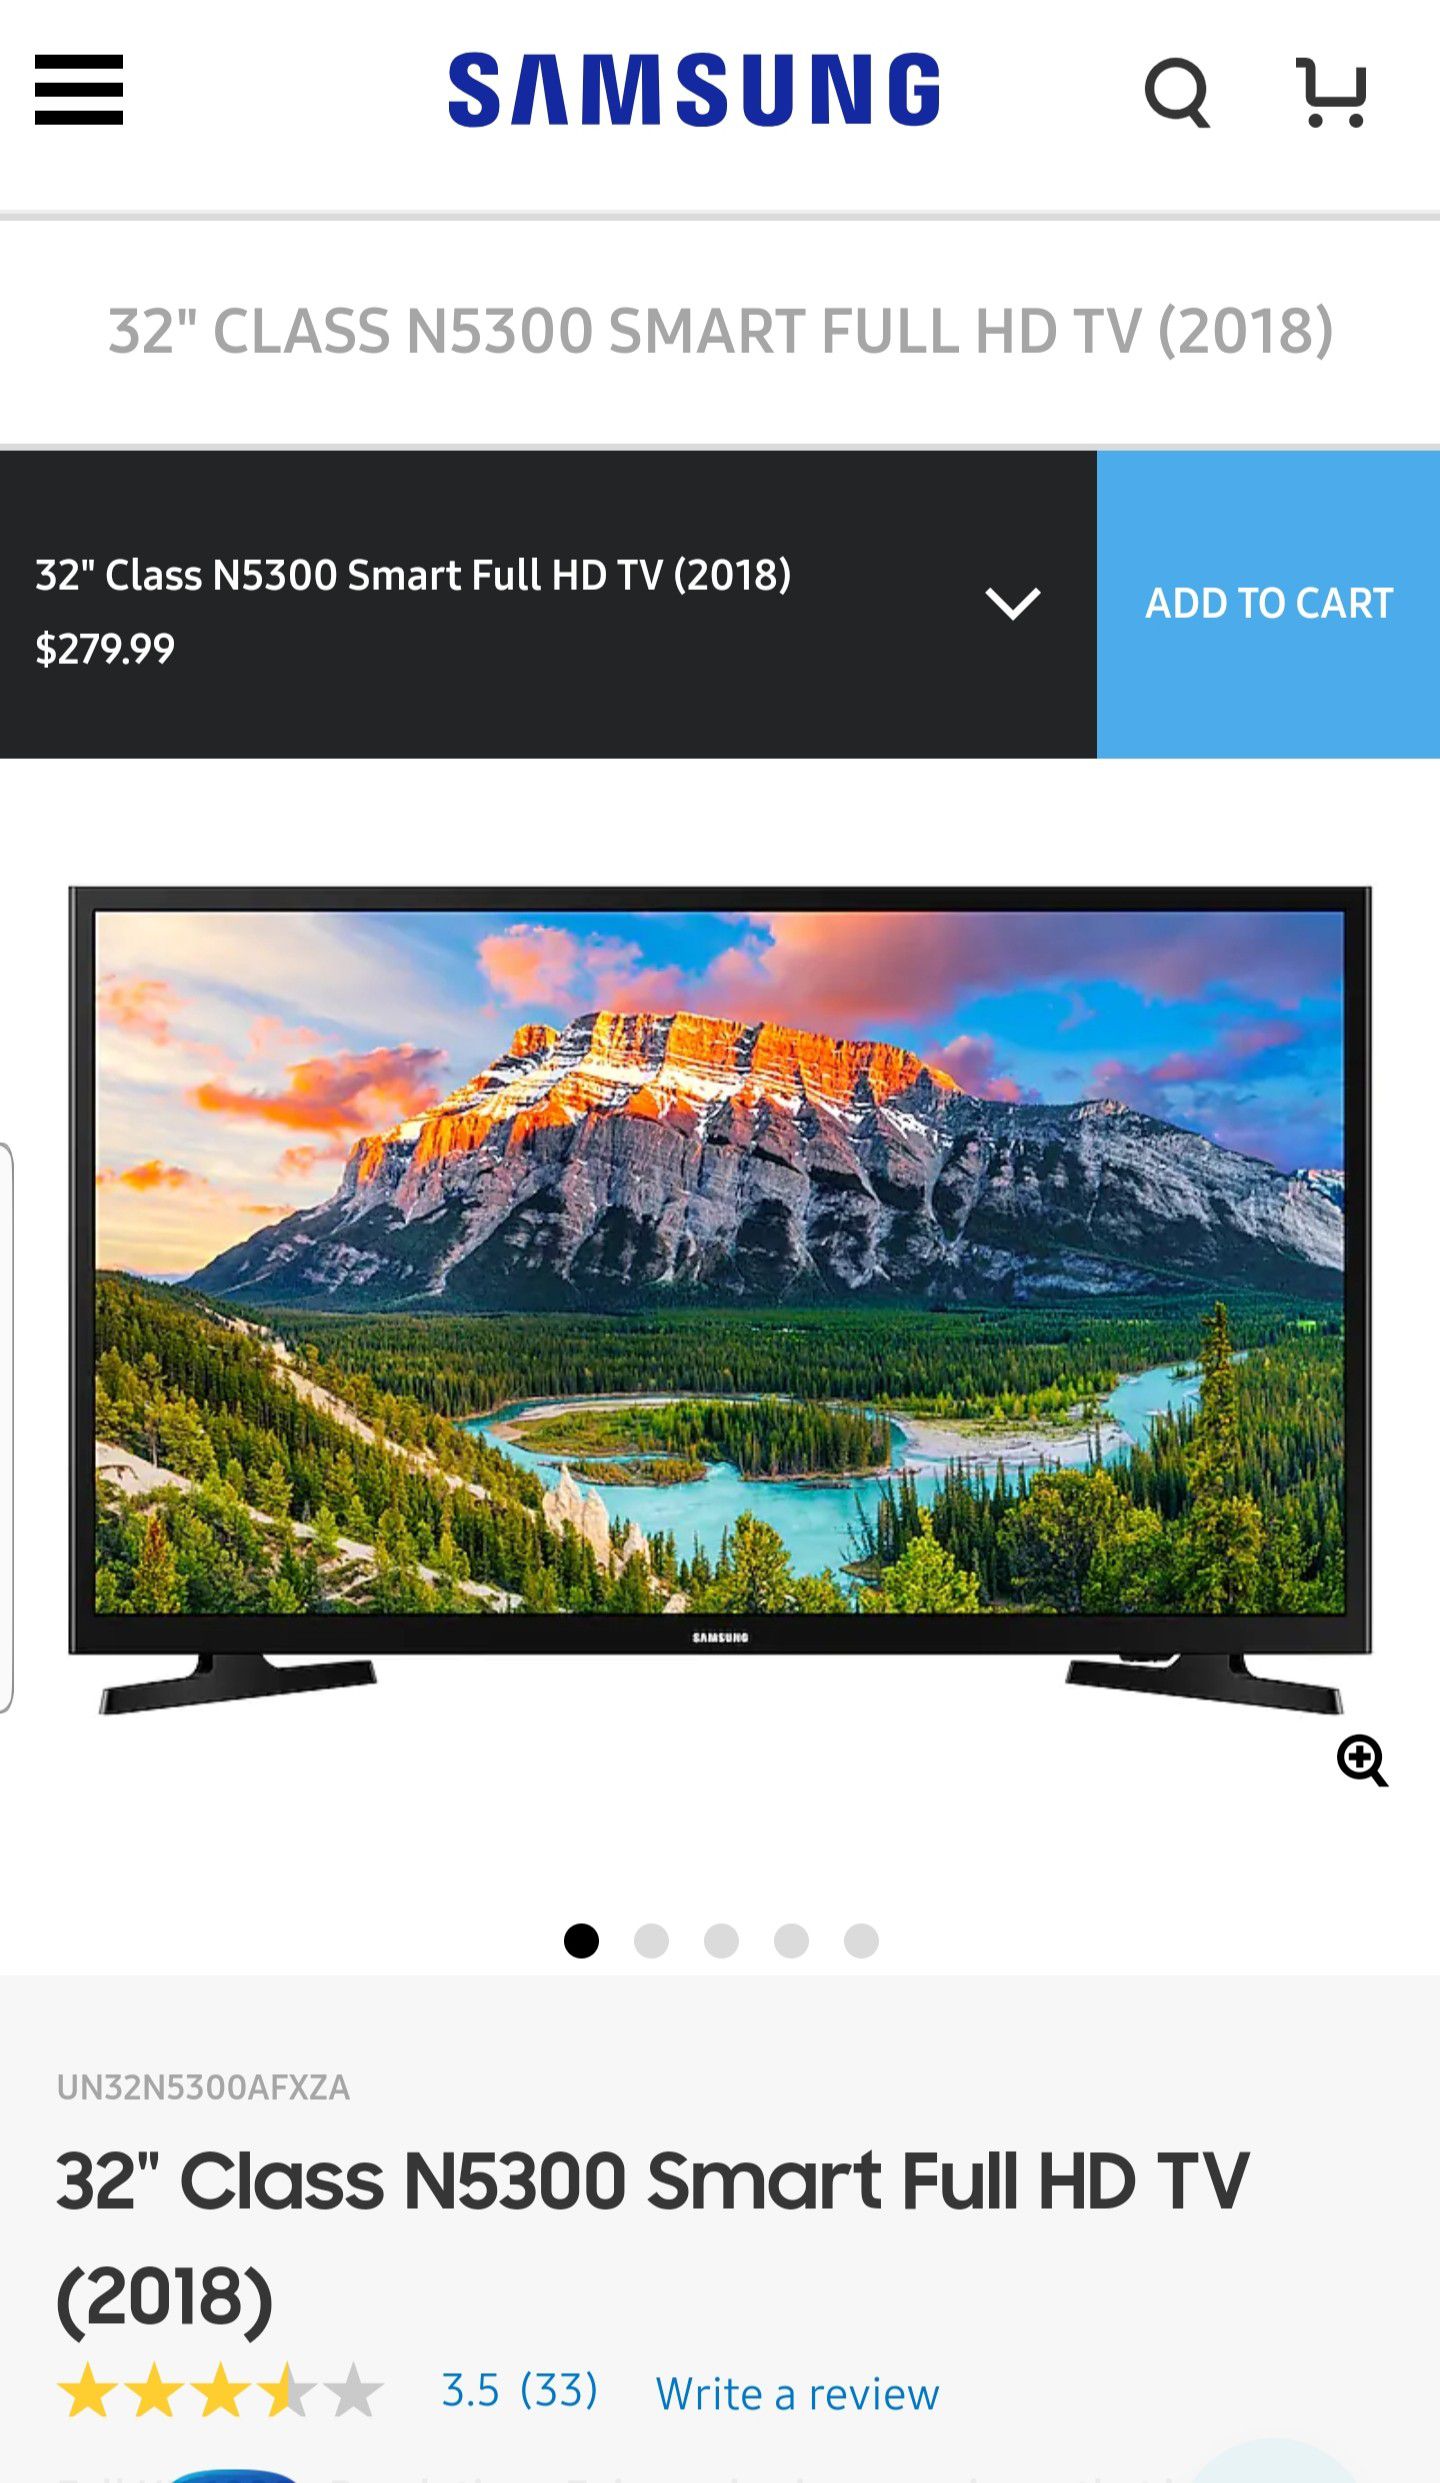 SMART TV$$$ Samsung Full HD TV 32" 5 Series N5300